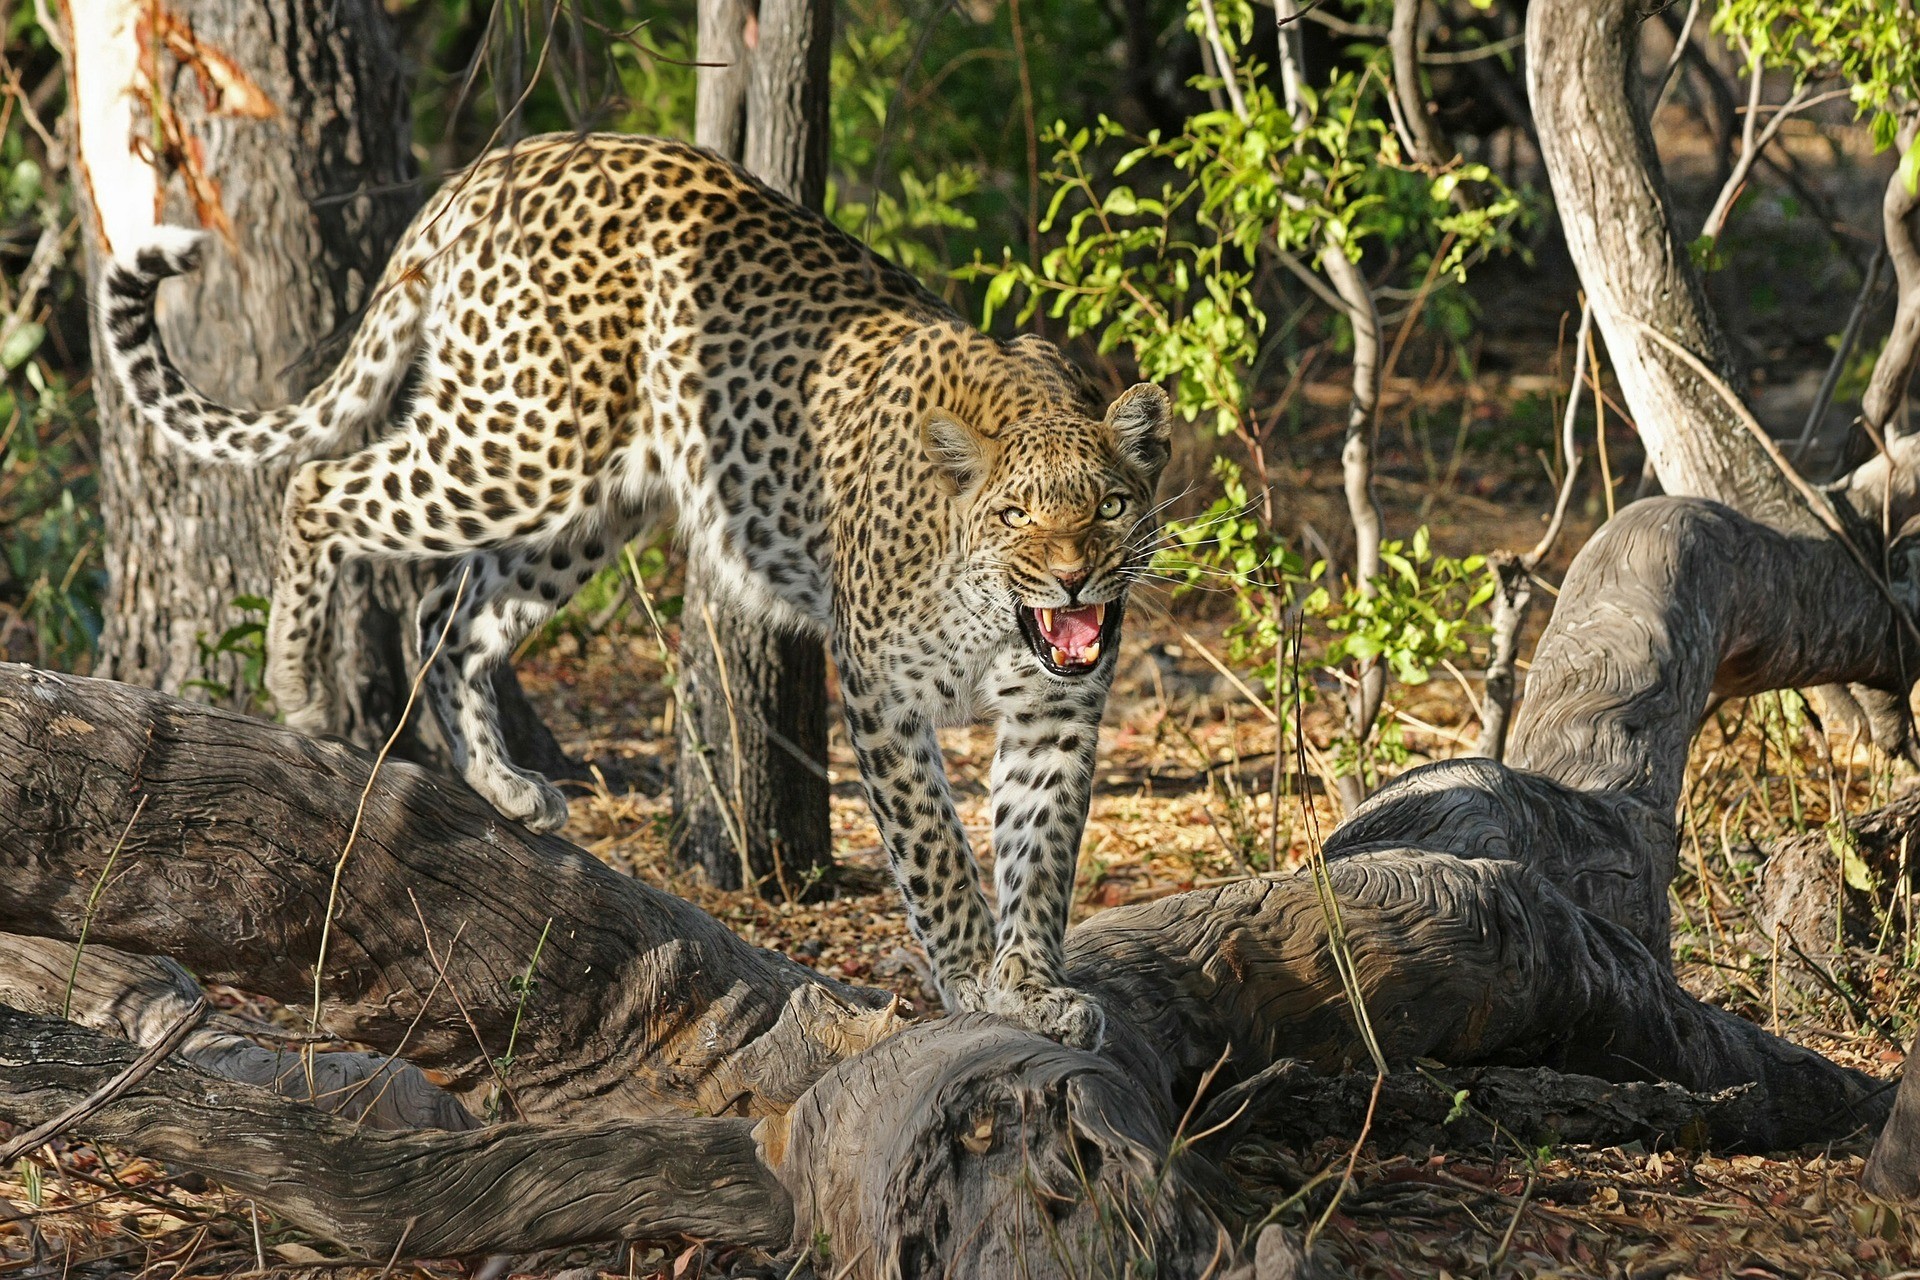 A leopard in Botswana, Africa